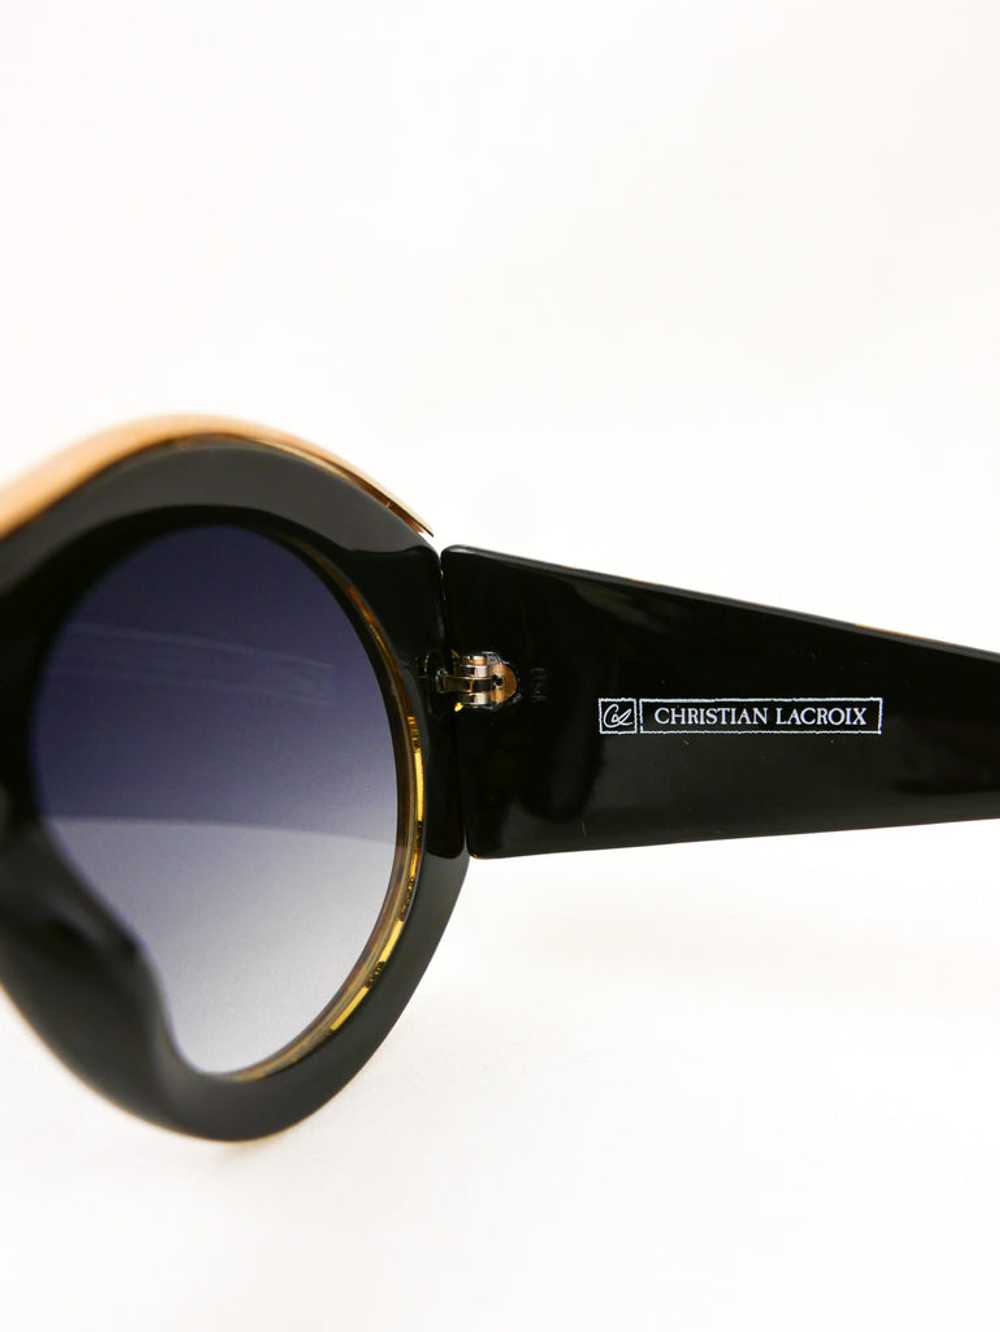 Christian Lacroix Sunglasses - image 9